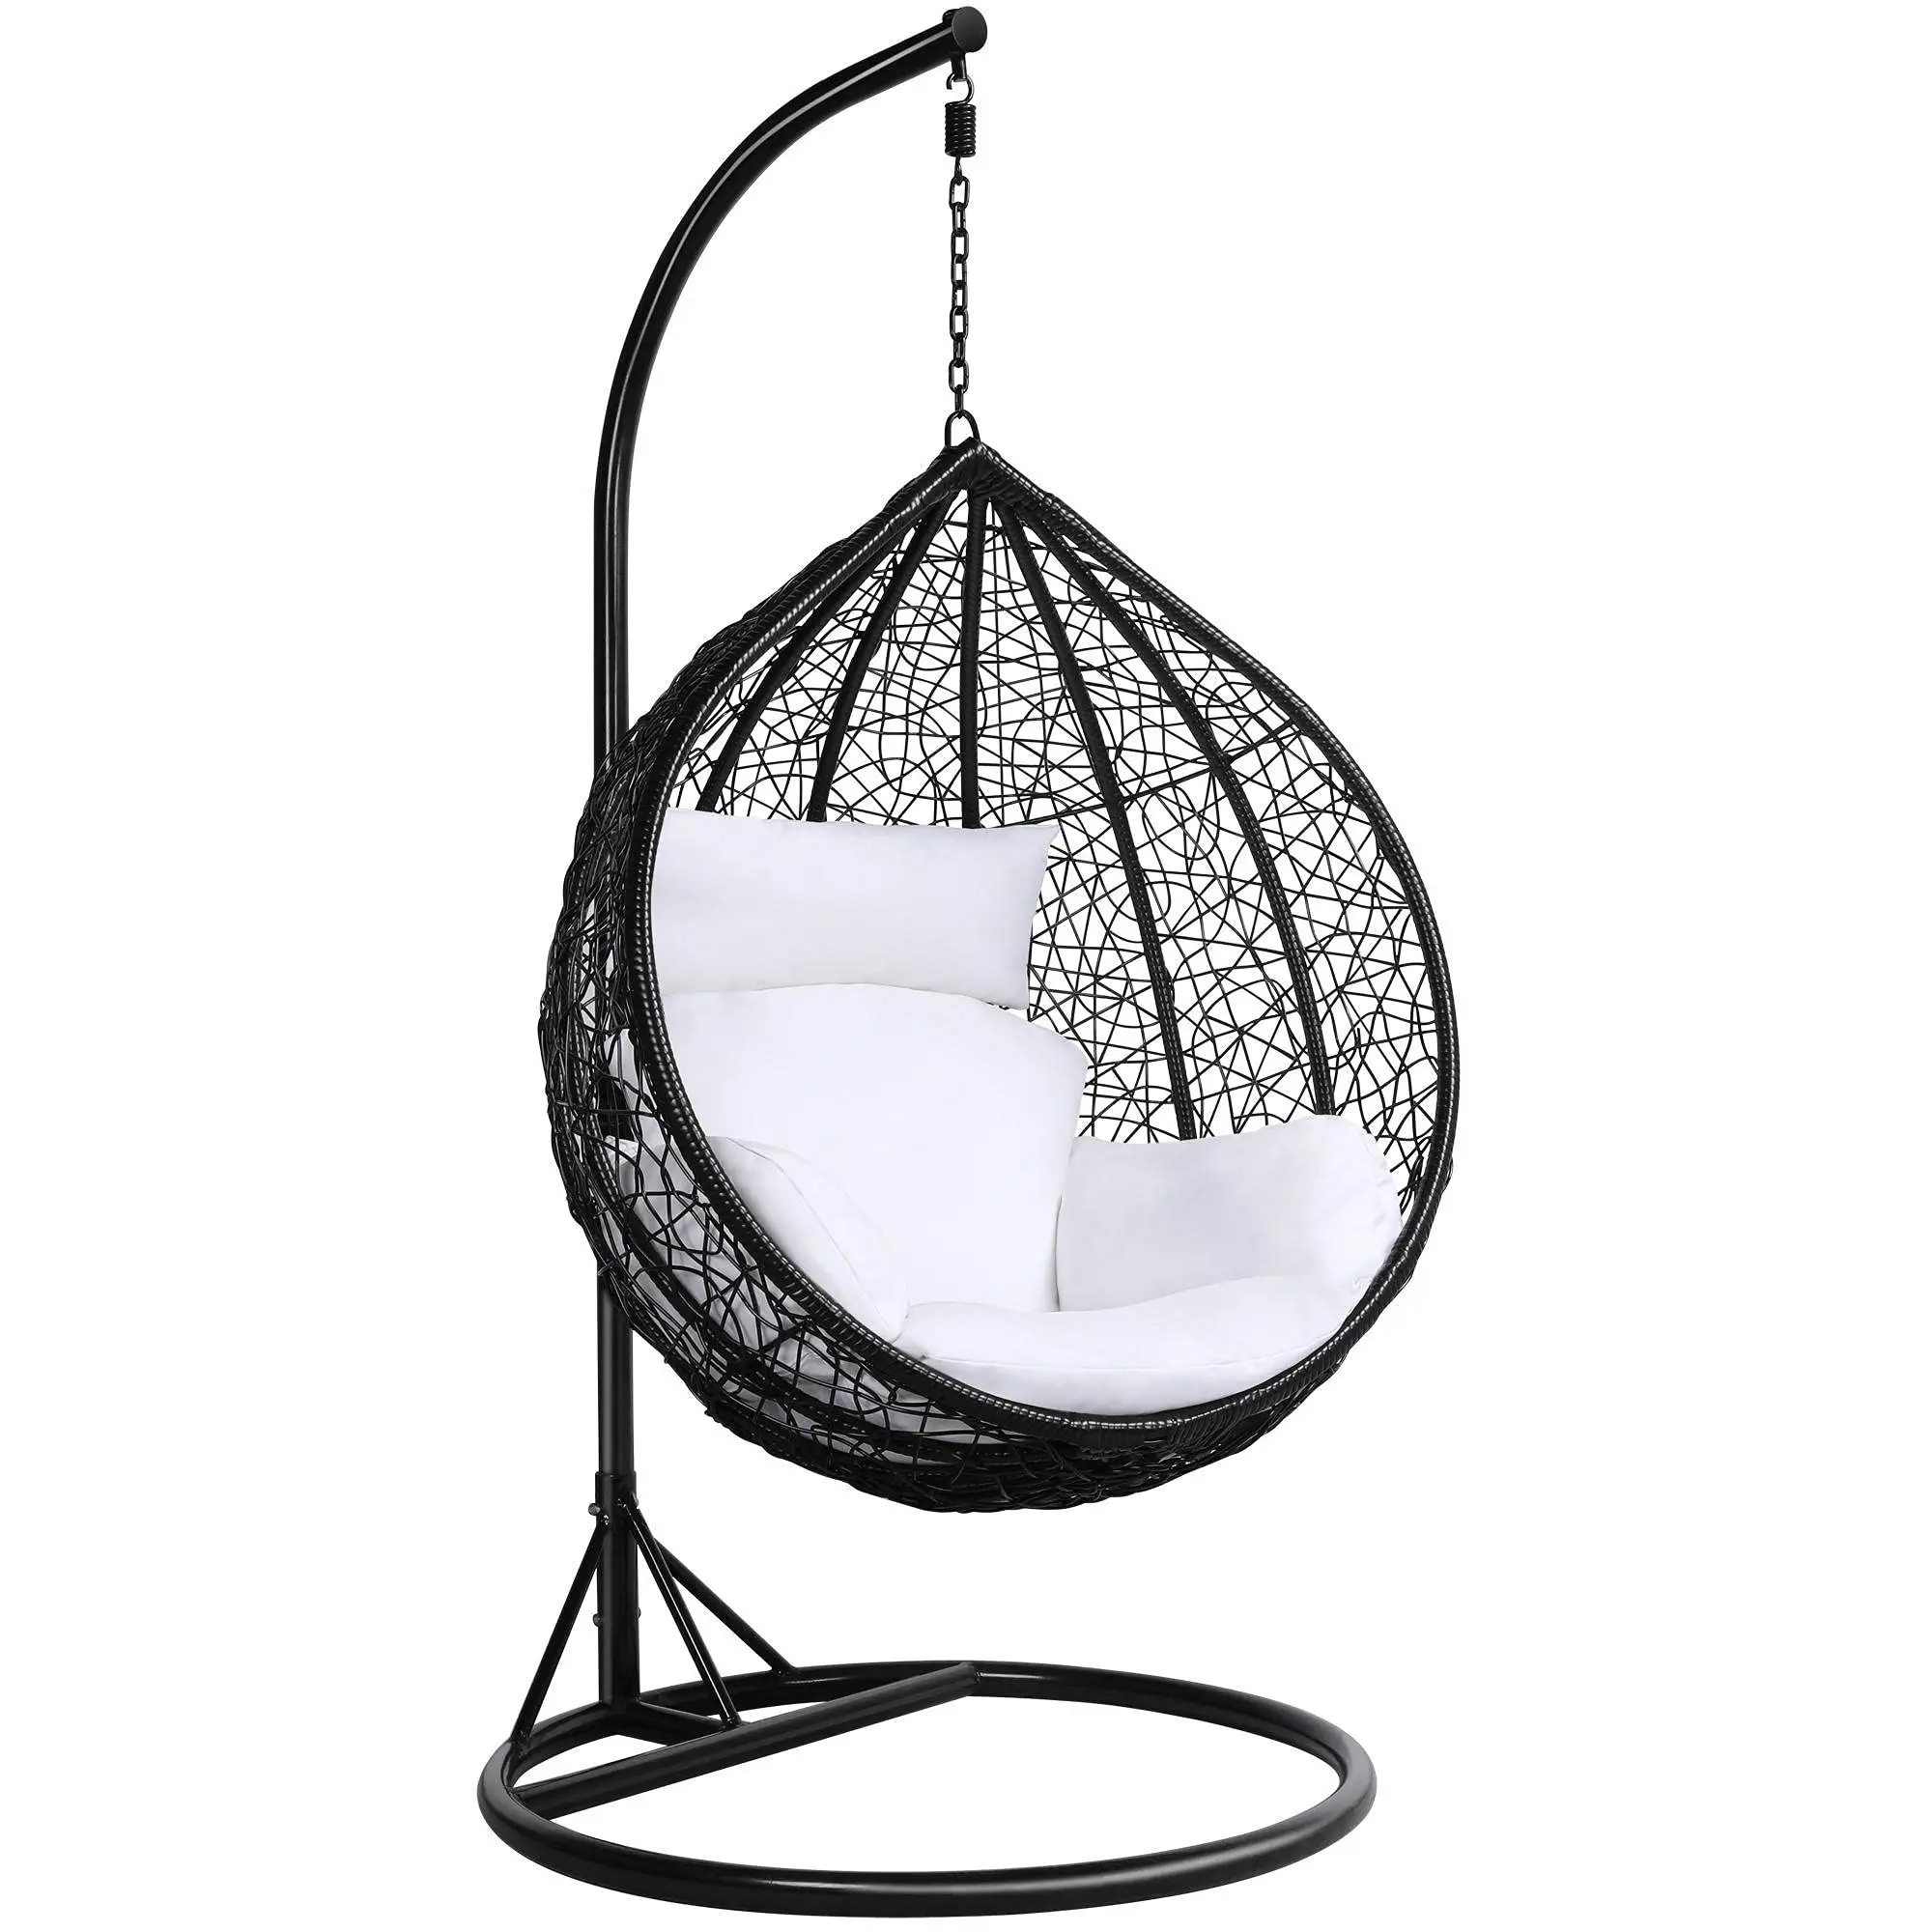 Hot Sales Wholesale Outdoor Bedroom Living Room Hotels Rattan Egg Swing Chair Detachable Hanging Balcony Swing Chair